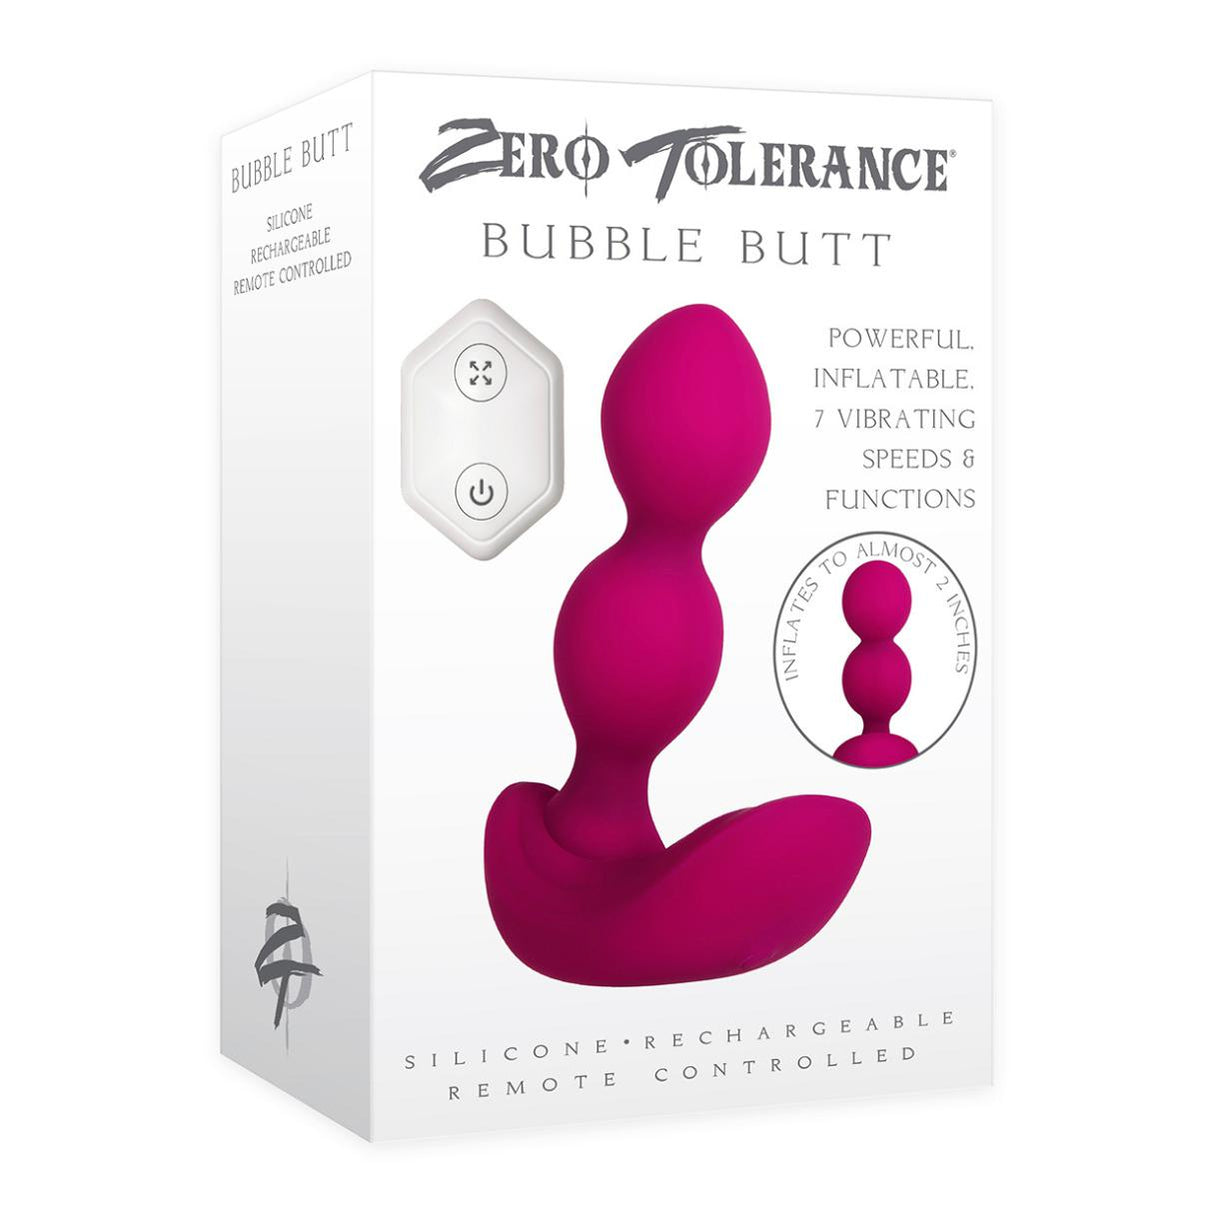 Zero Tolerance The Bubble Butt Inflatable Vibe